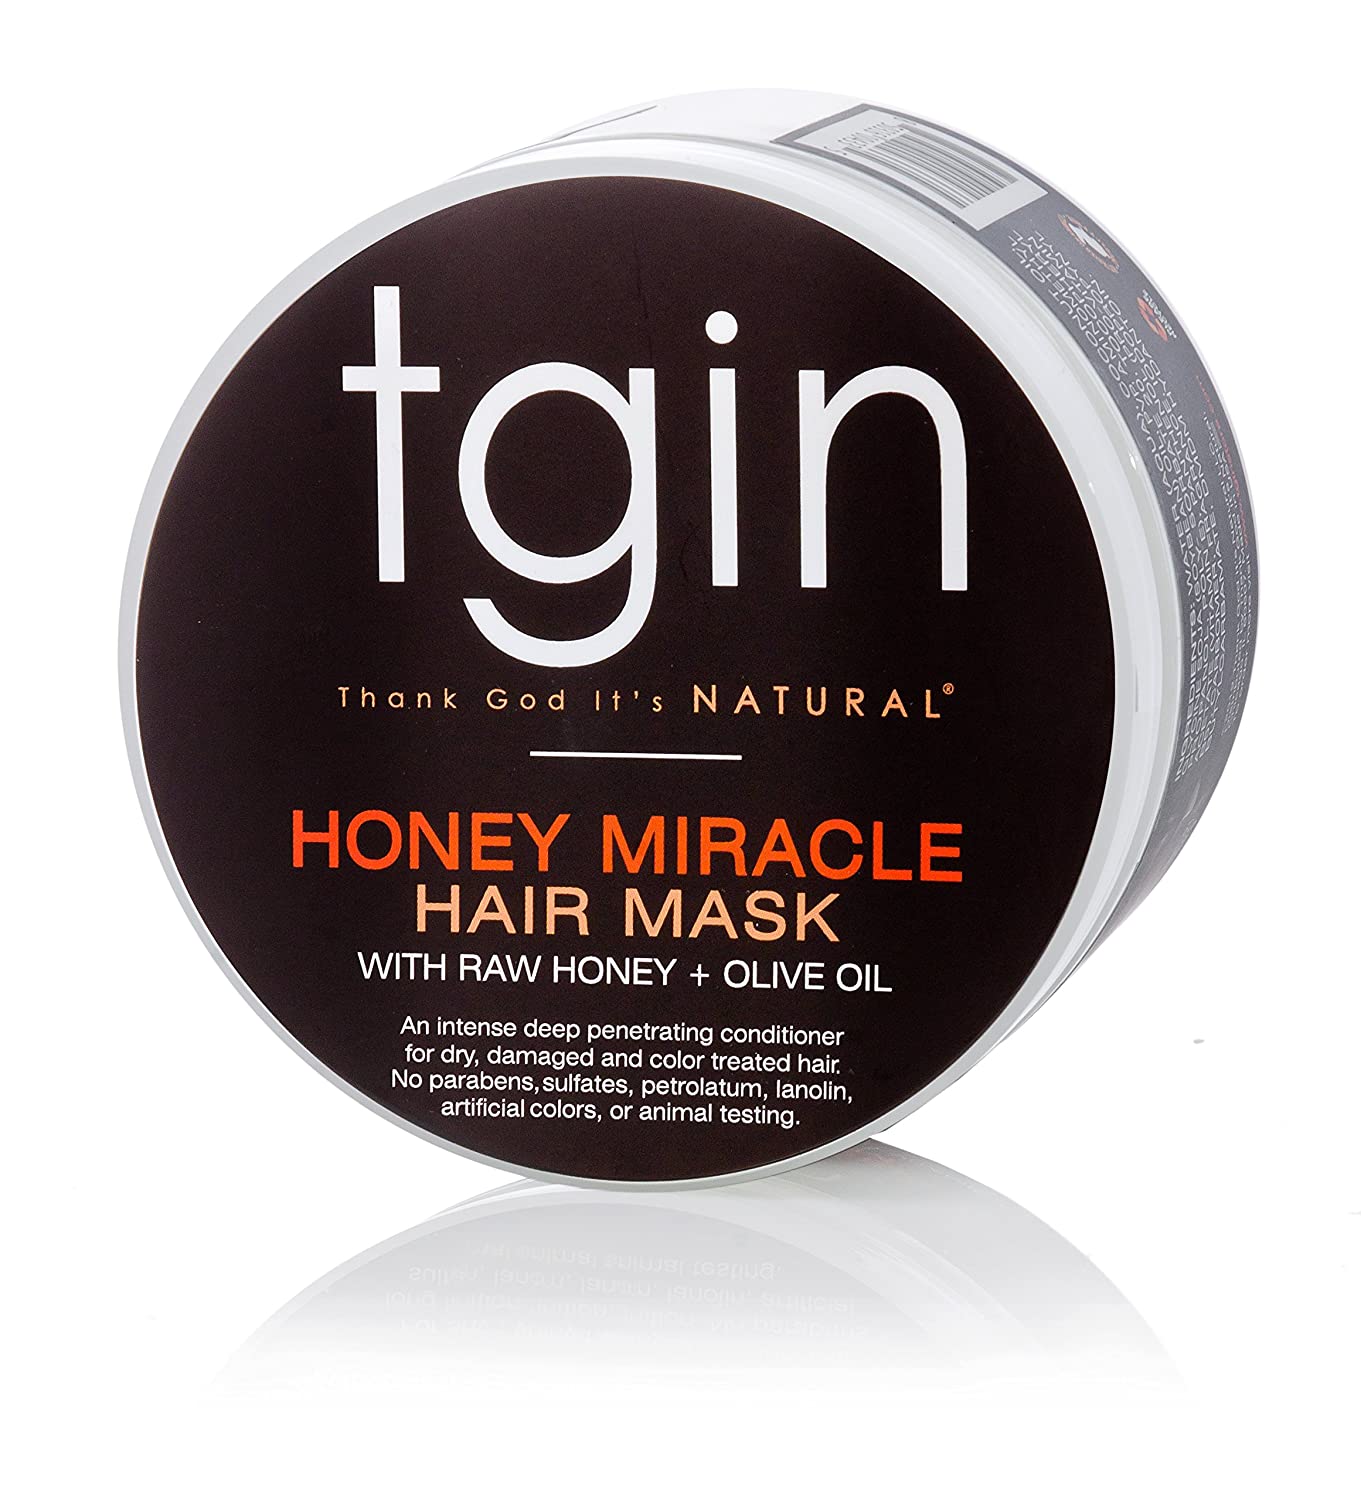 tgin Honey Miracle Detangling Conditioner Natural Hair Product